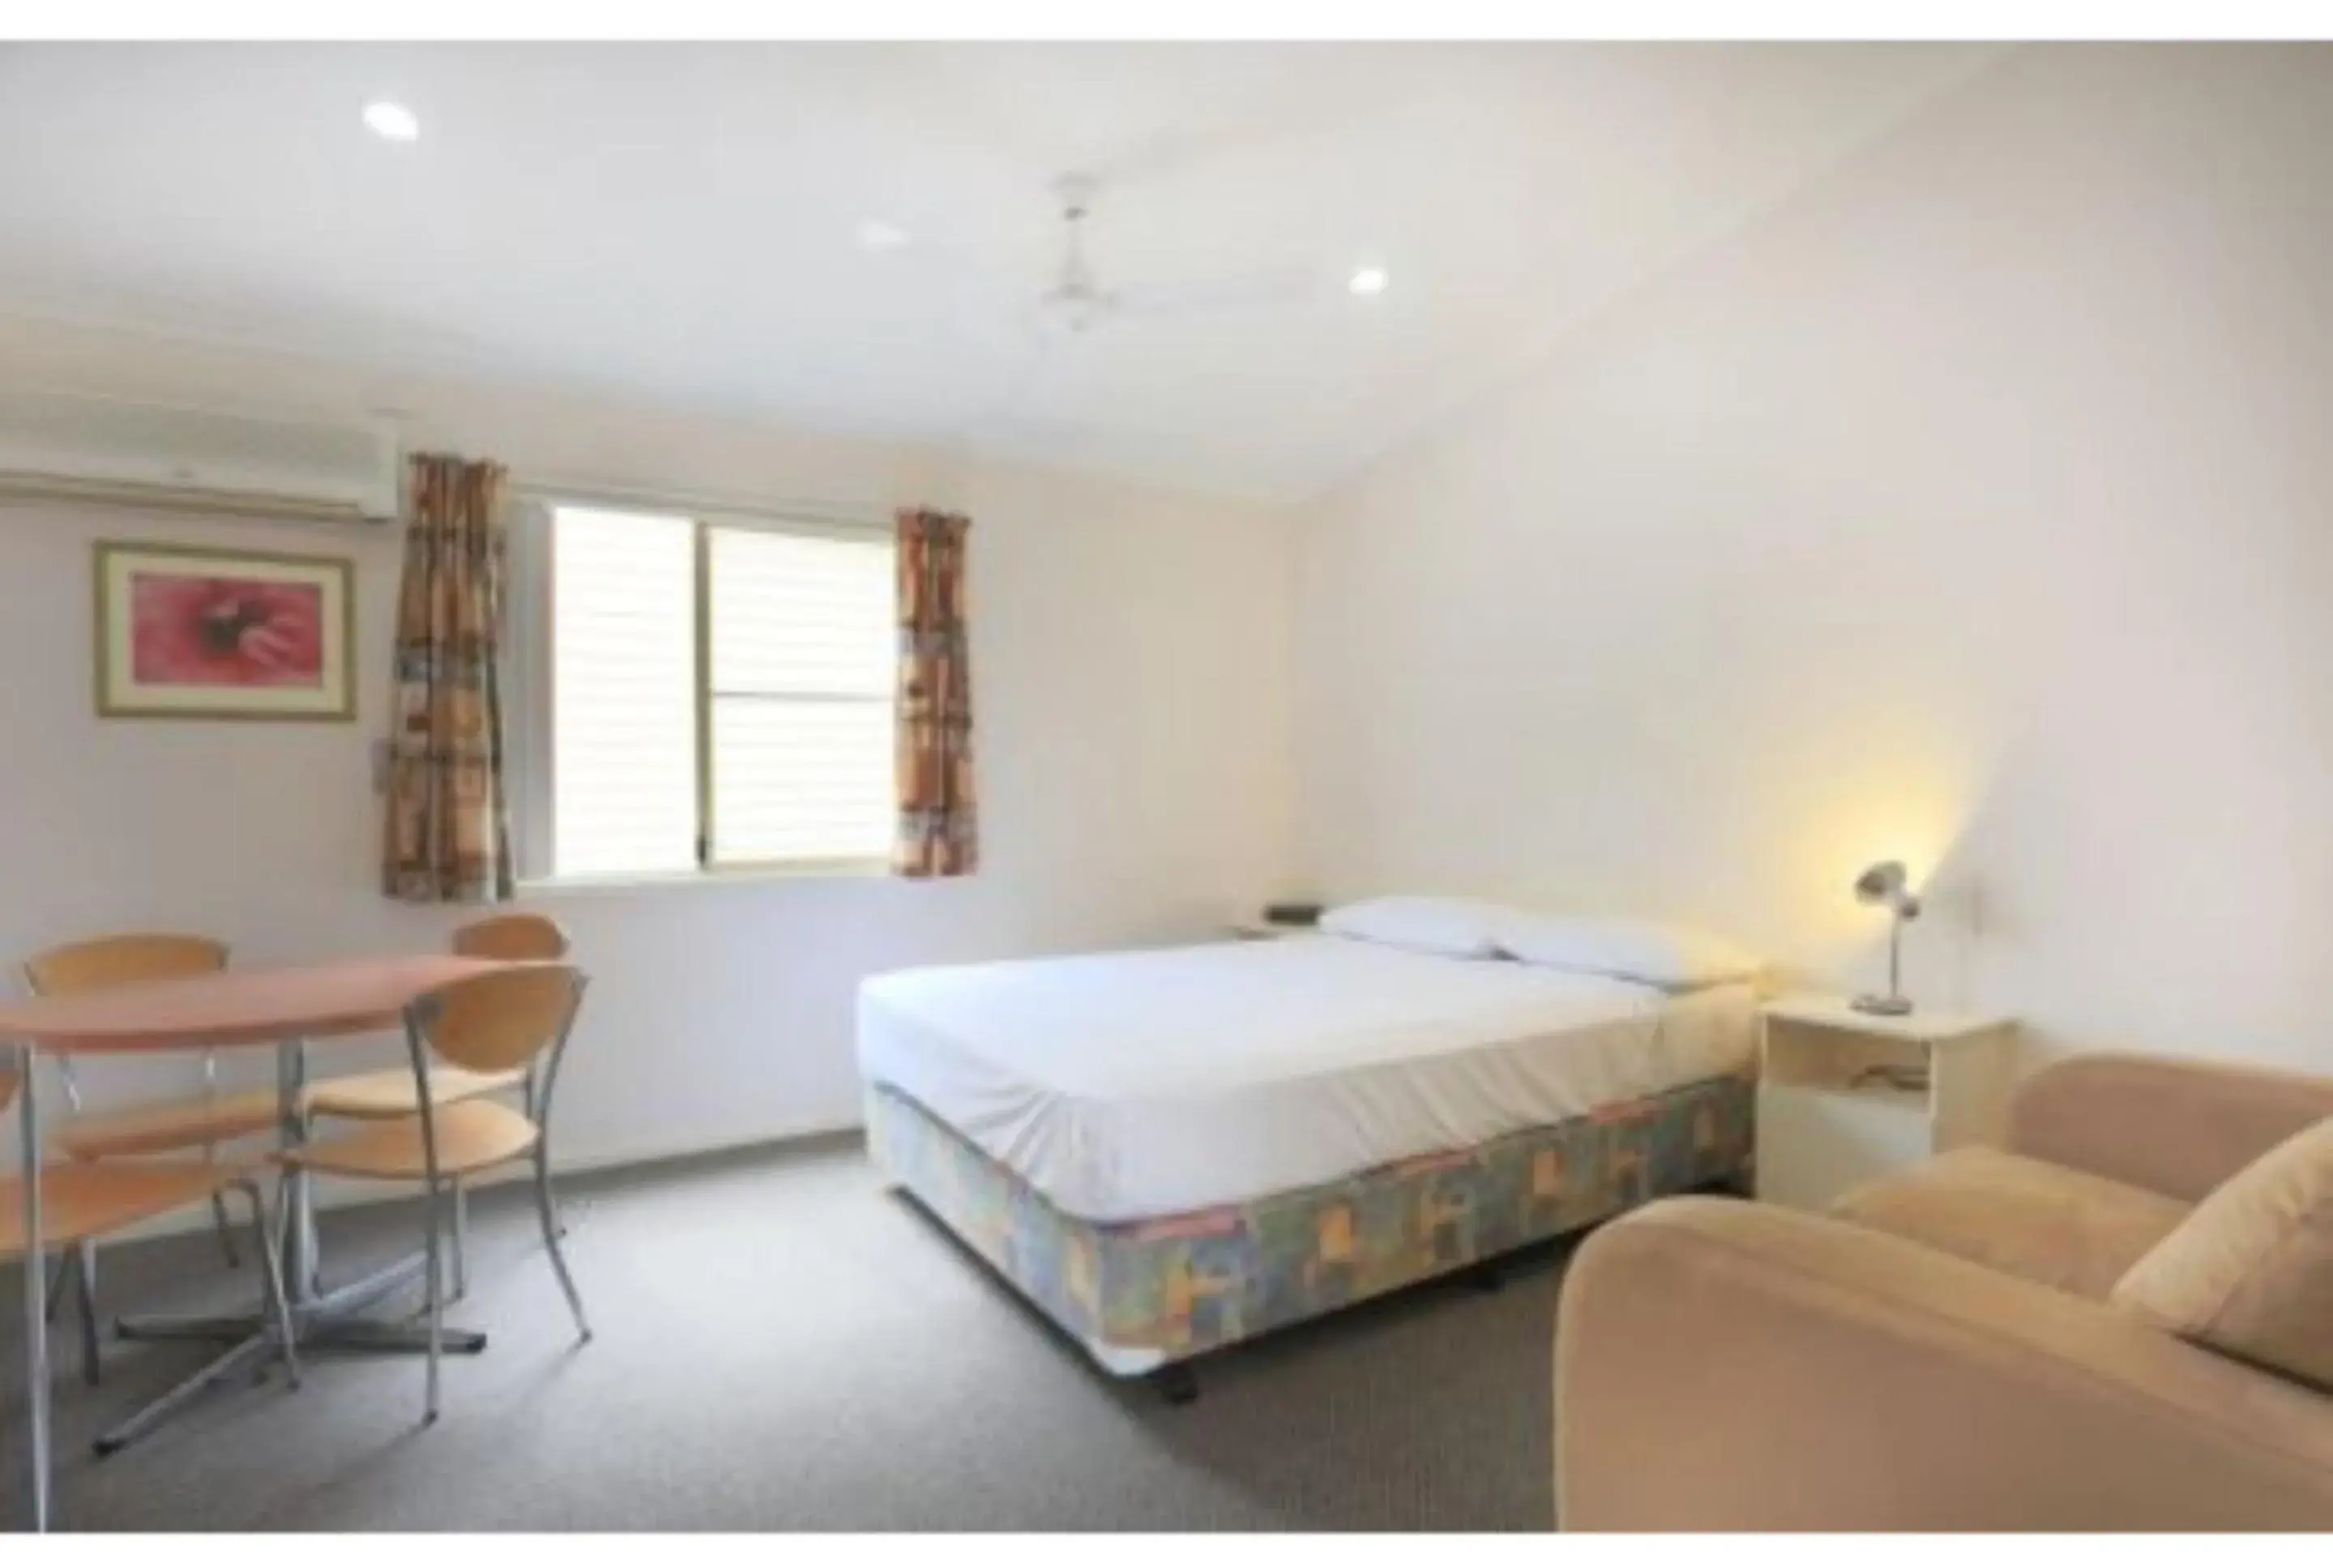 Bedroom, Room Photo in Discovery Parks - Kalgoorlie Goldfields